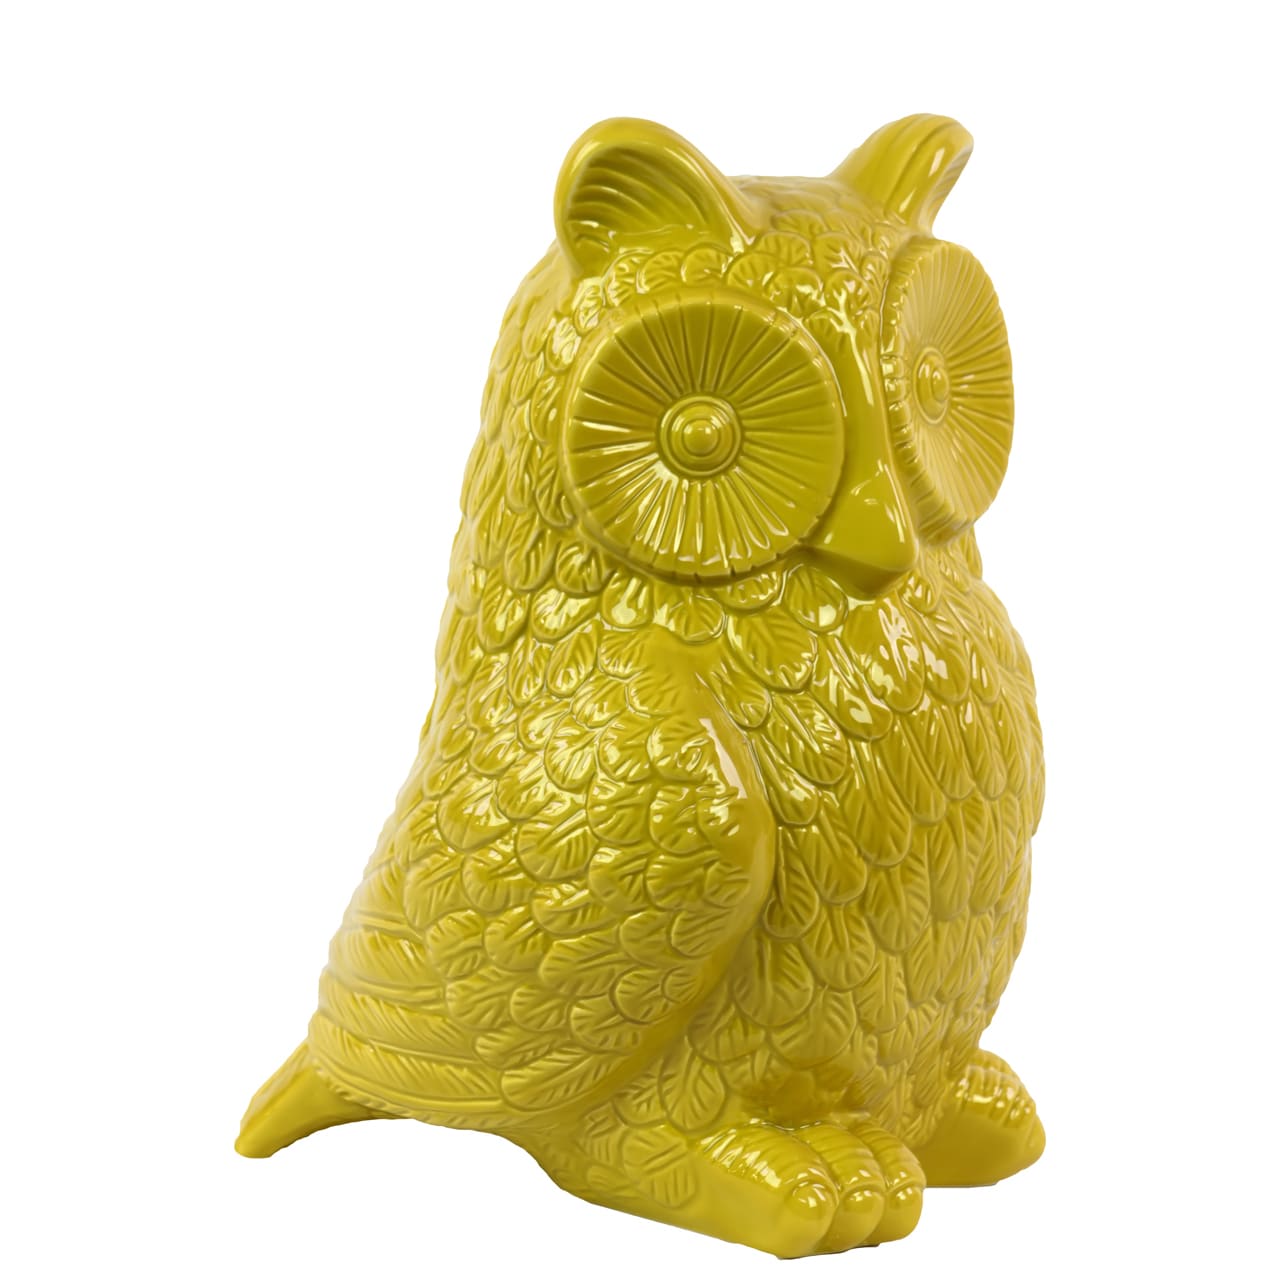 Yellow Ceramic Owl